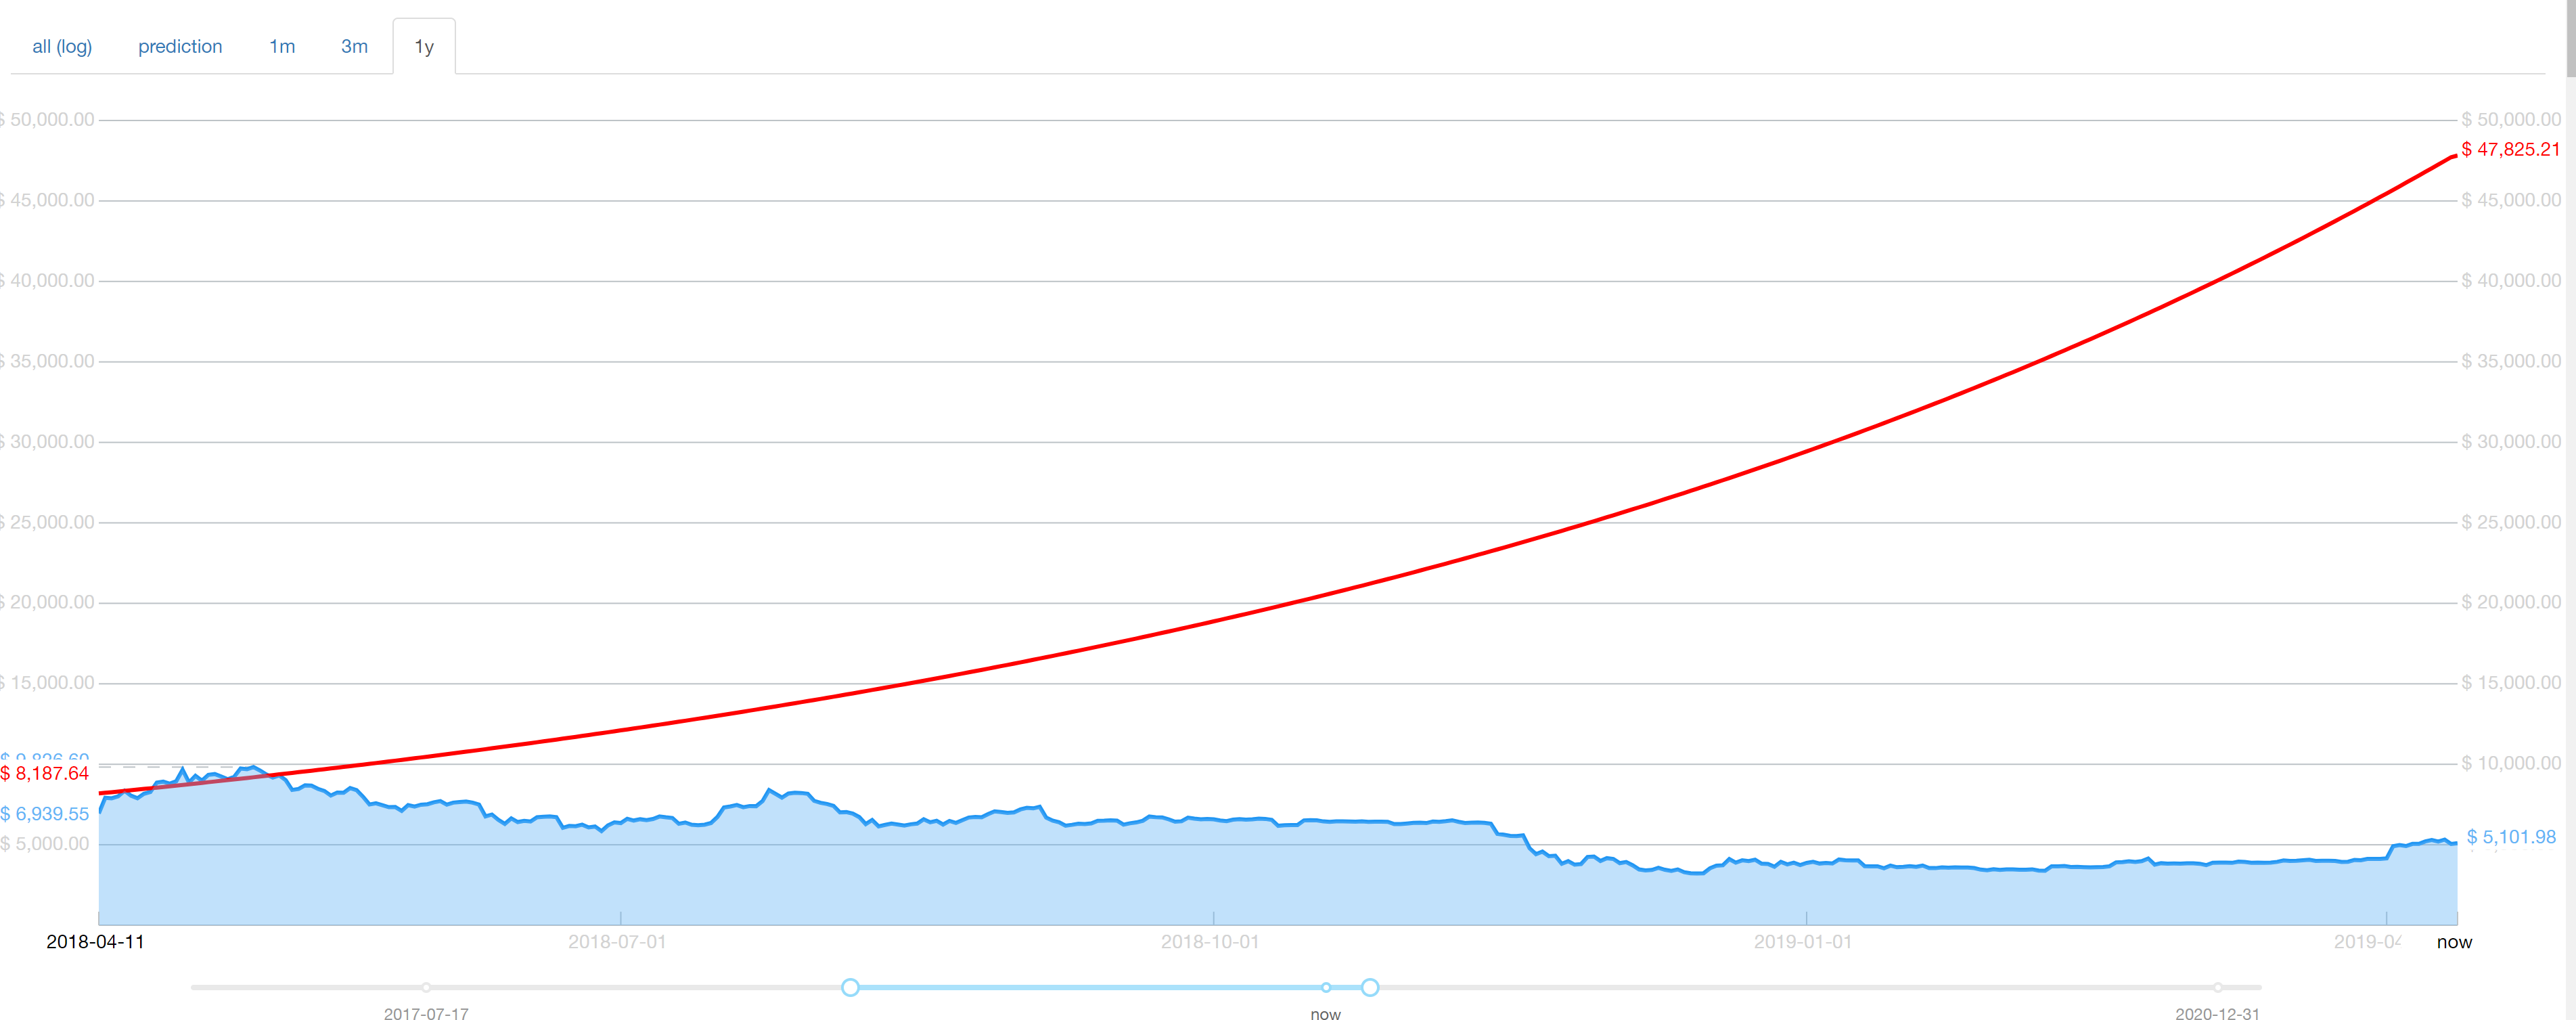 Bitcoin Price In 2020 -- A Very Bullish And A Very Bearish Forecast